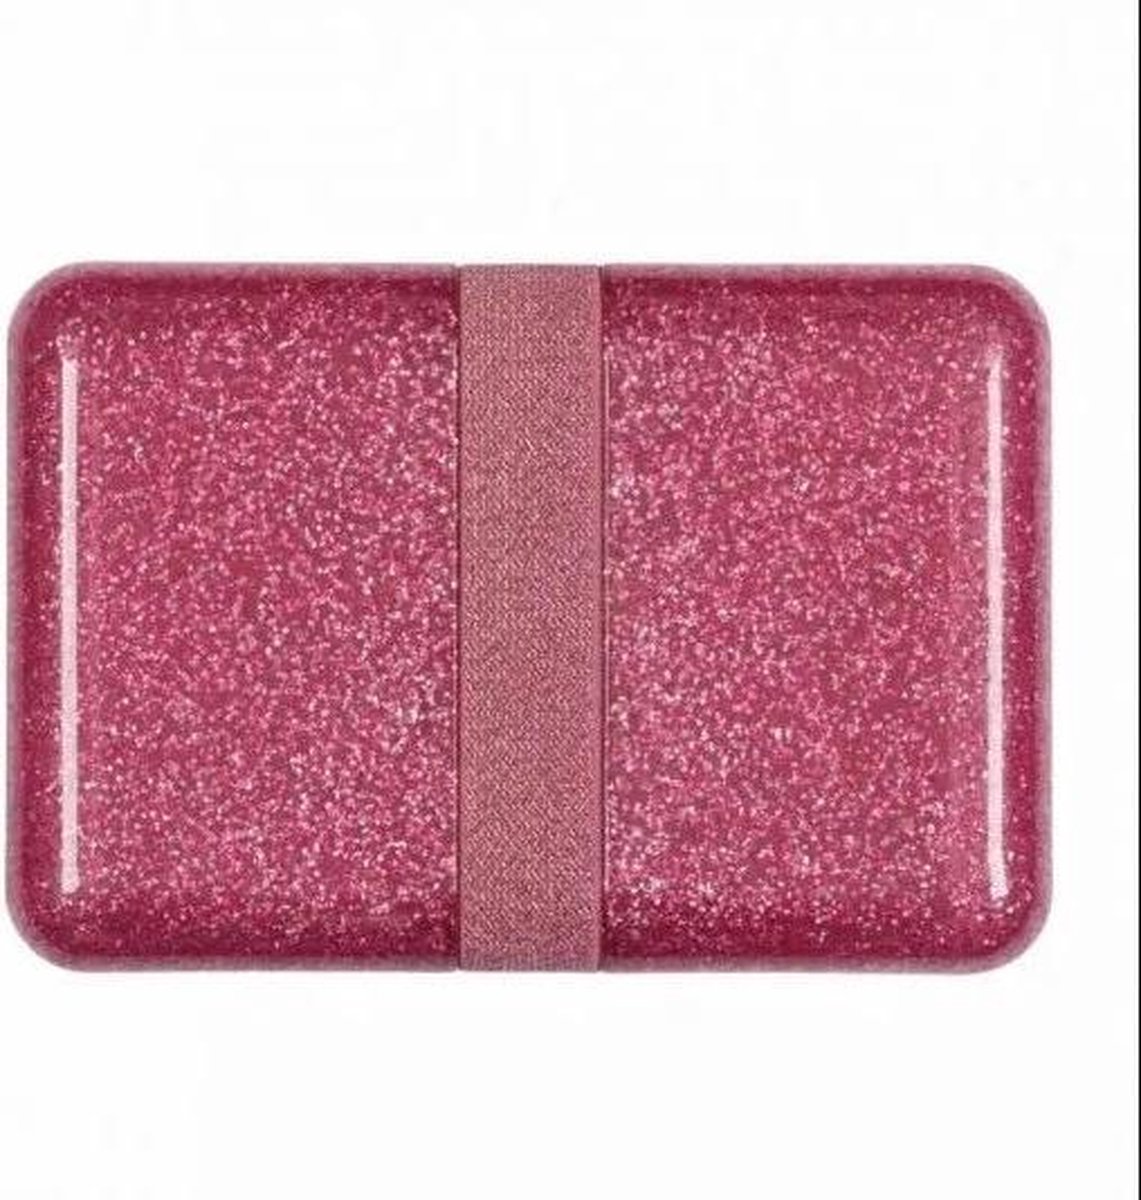 Lunch box: Glitter - roze | A Little Lovely Company